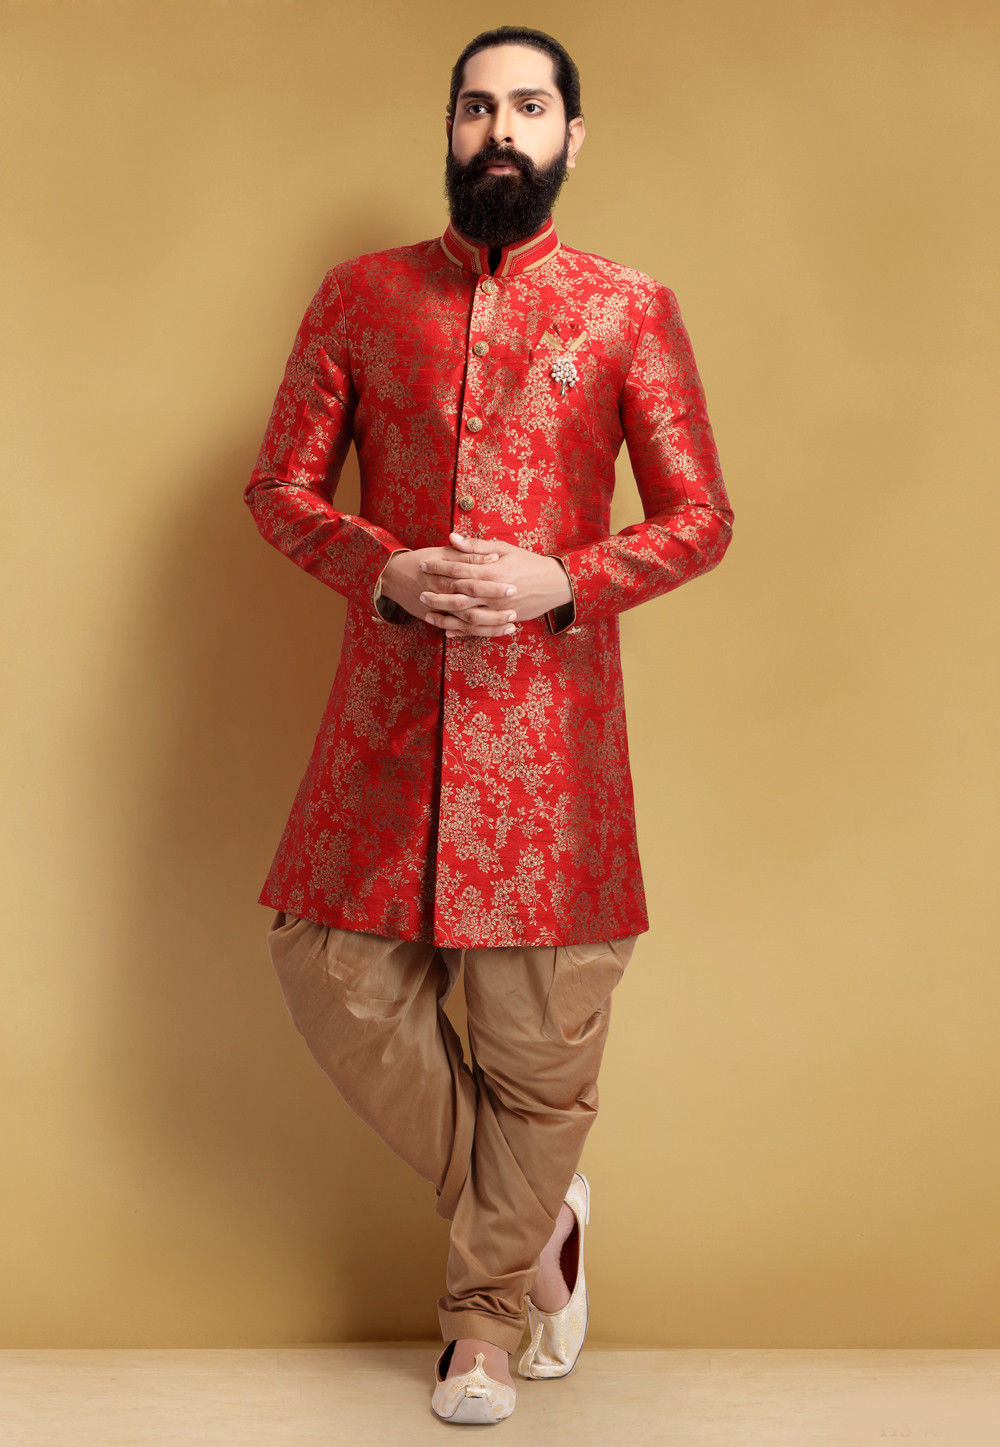 Discover 212+ long jodhpuri suit best